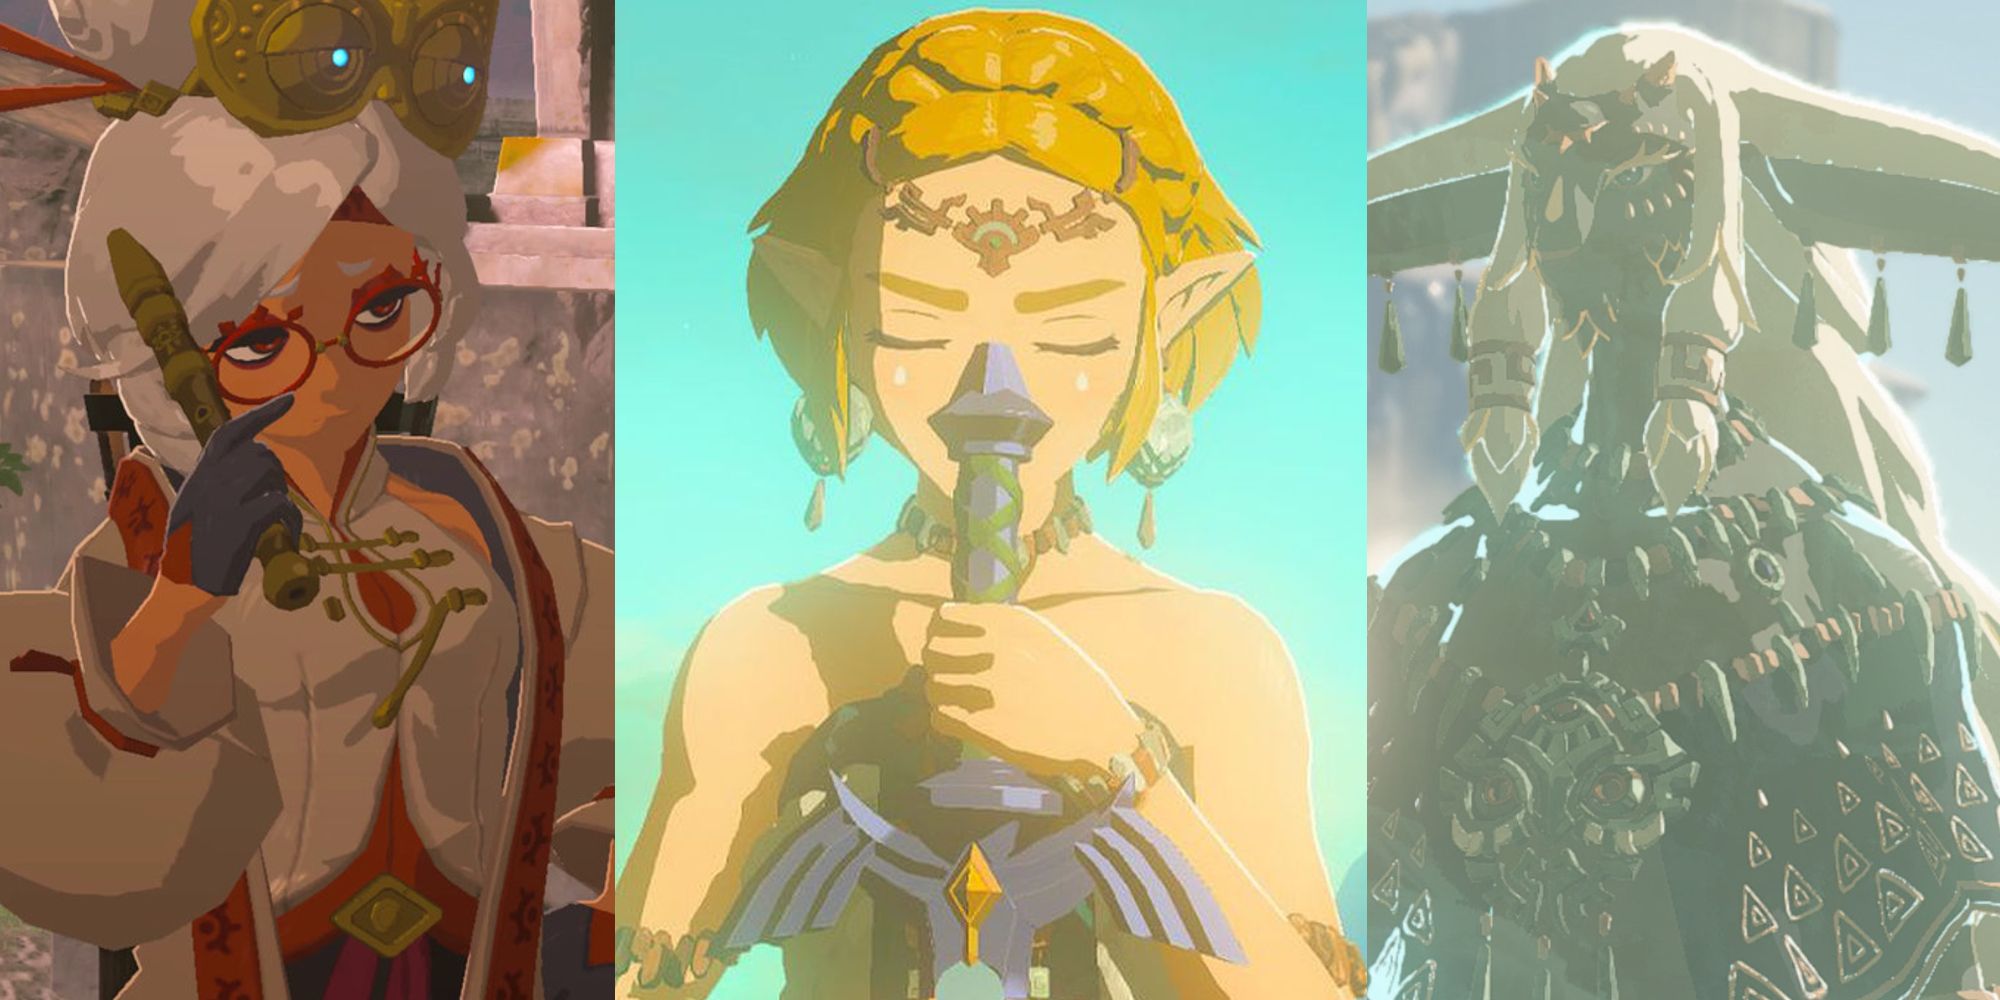 Purah fixing her glasses; Zelda holding the Master Sword; Rauru's ghost in the sky